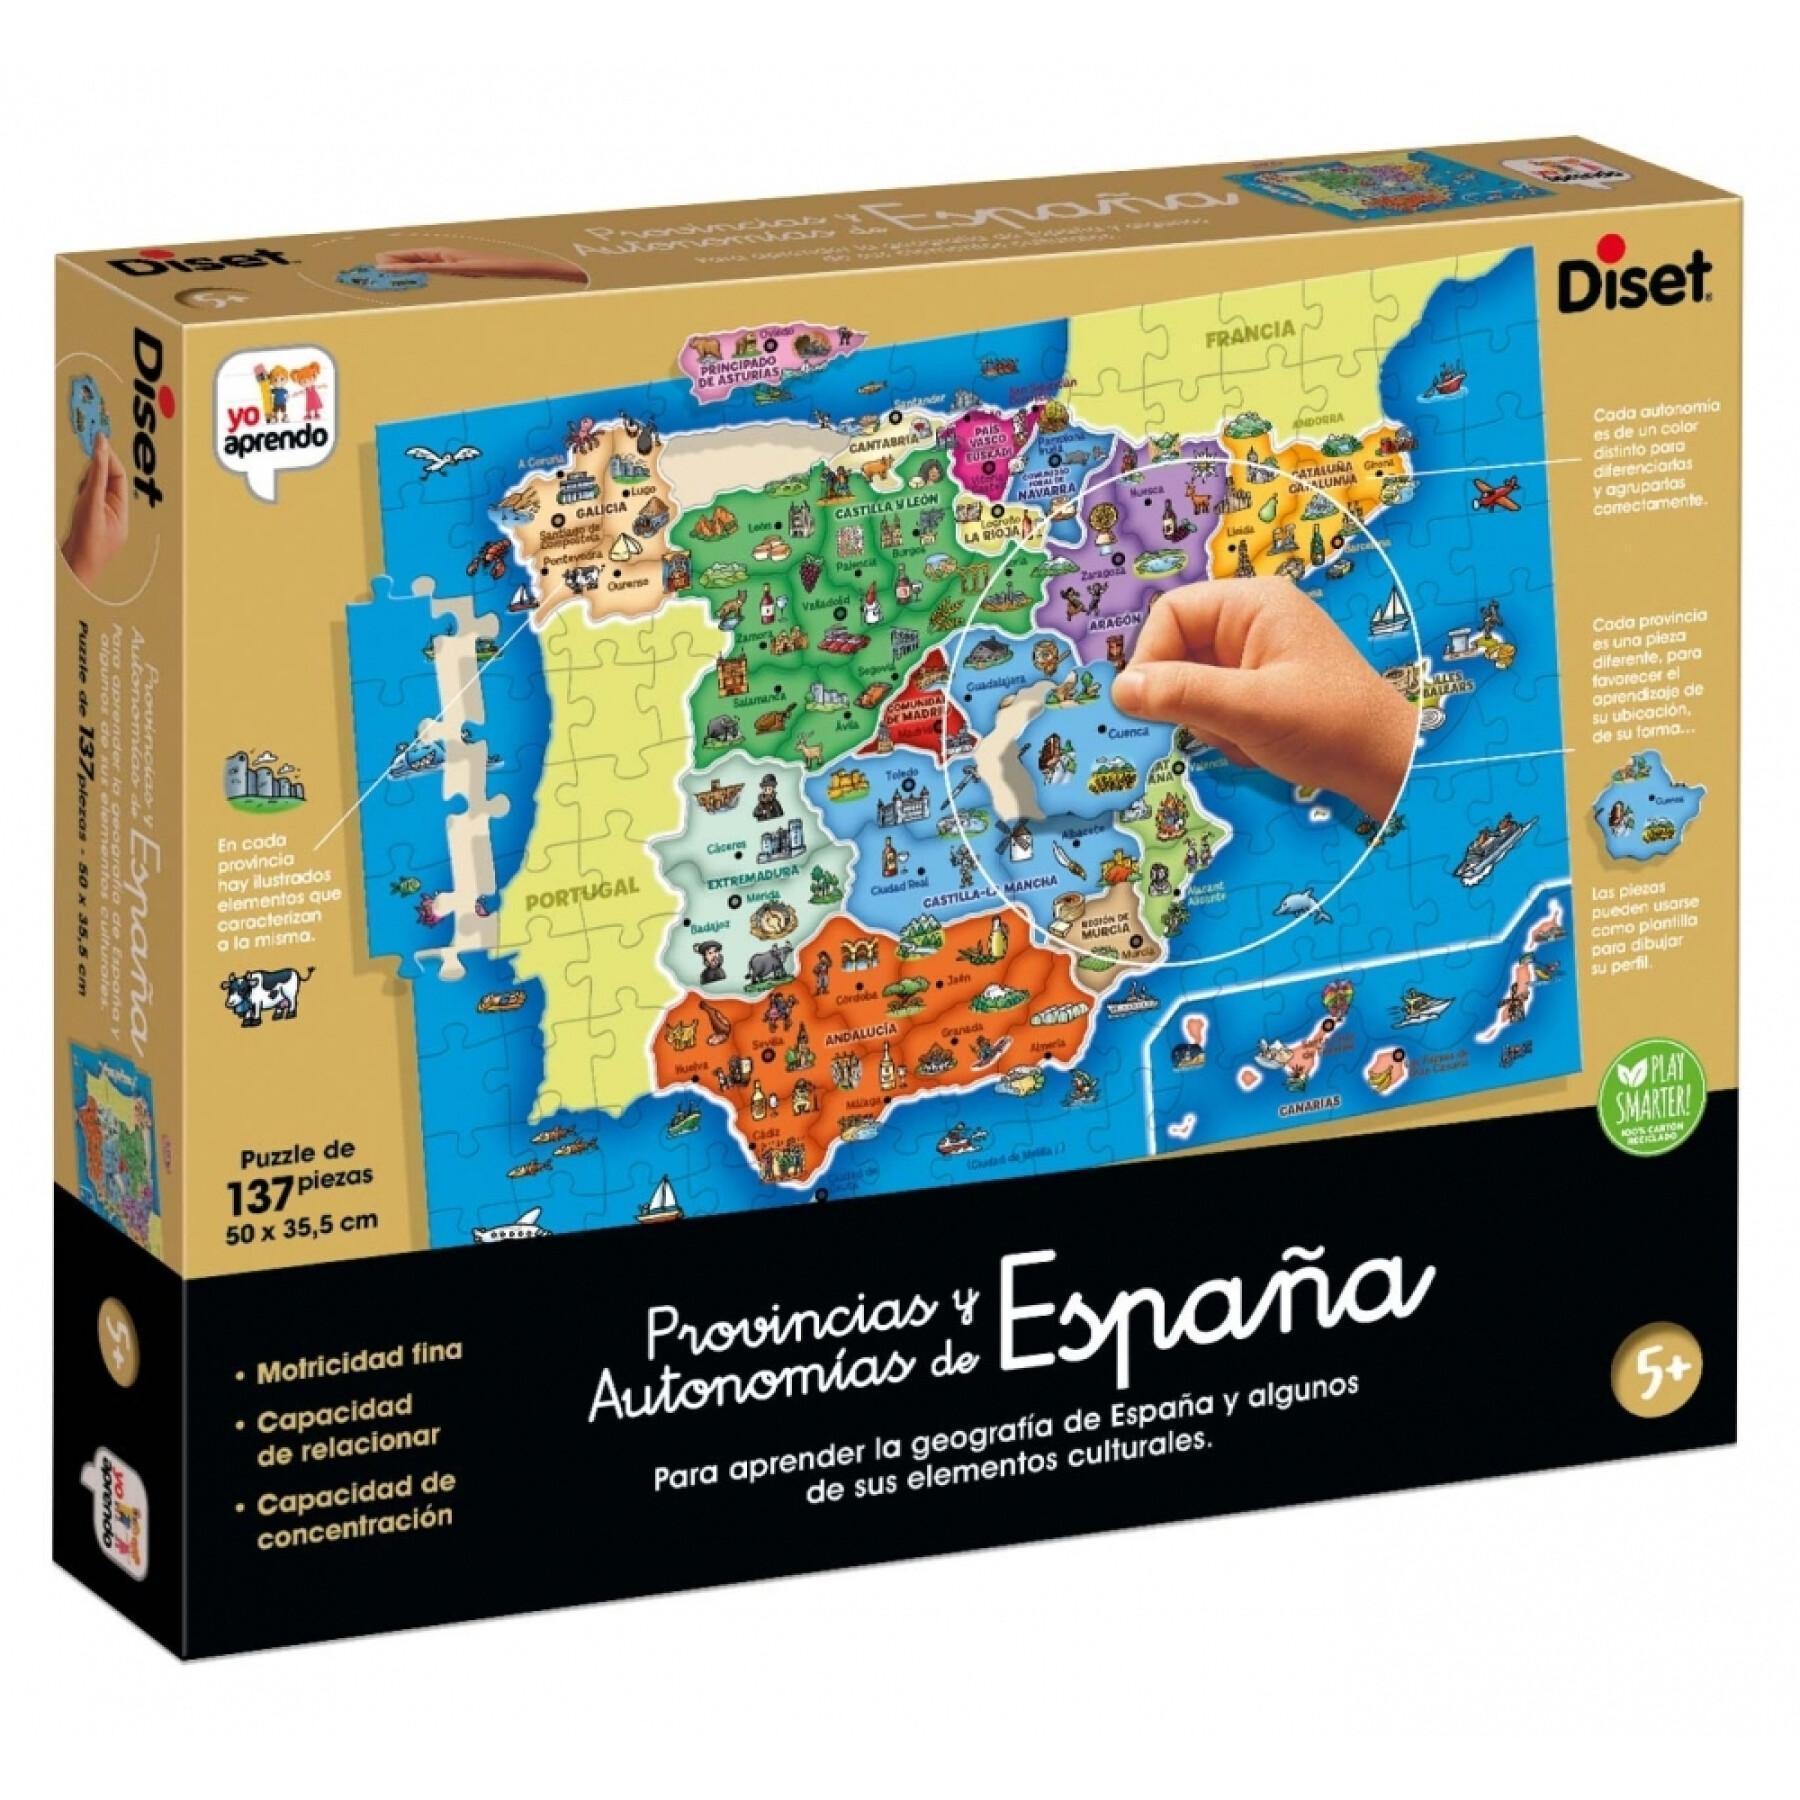 Puzzle mit 137 Teilen Diset España Prov -Autonomías